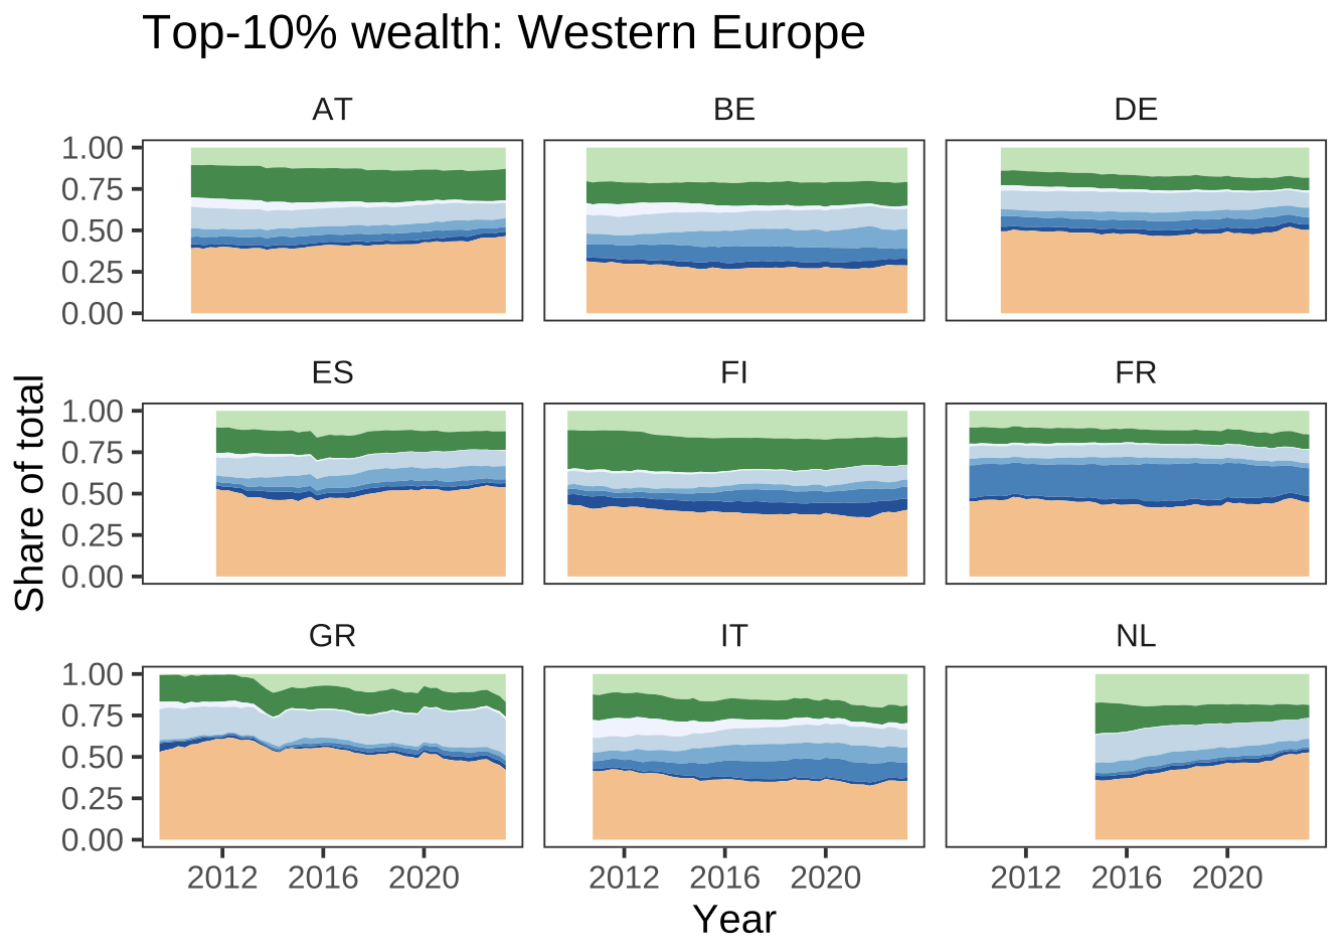 Top decile wealth in Western European countries.
